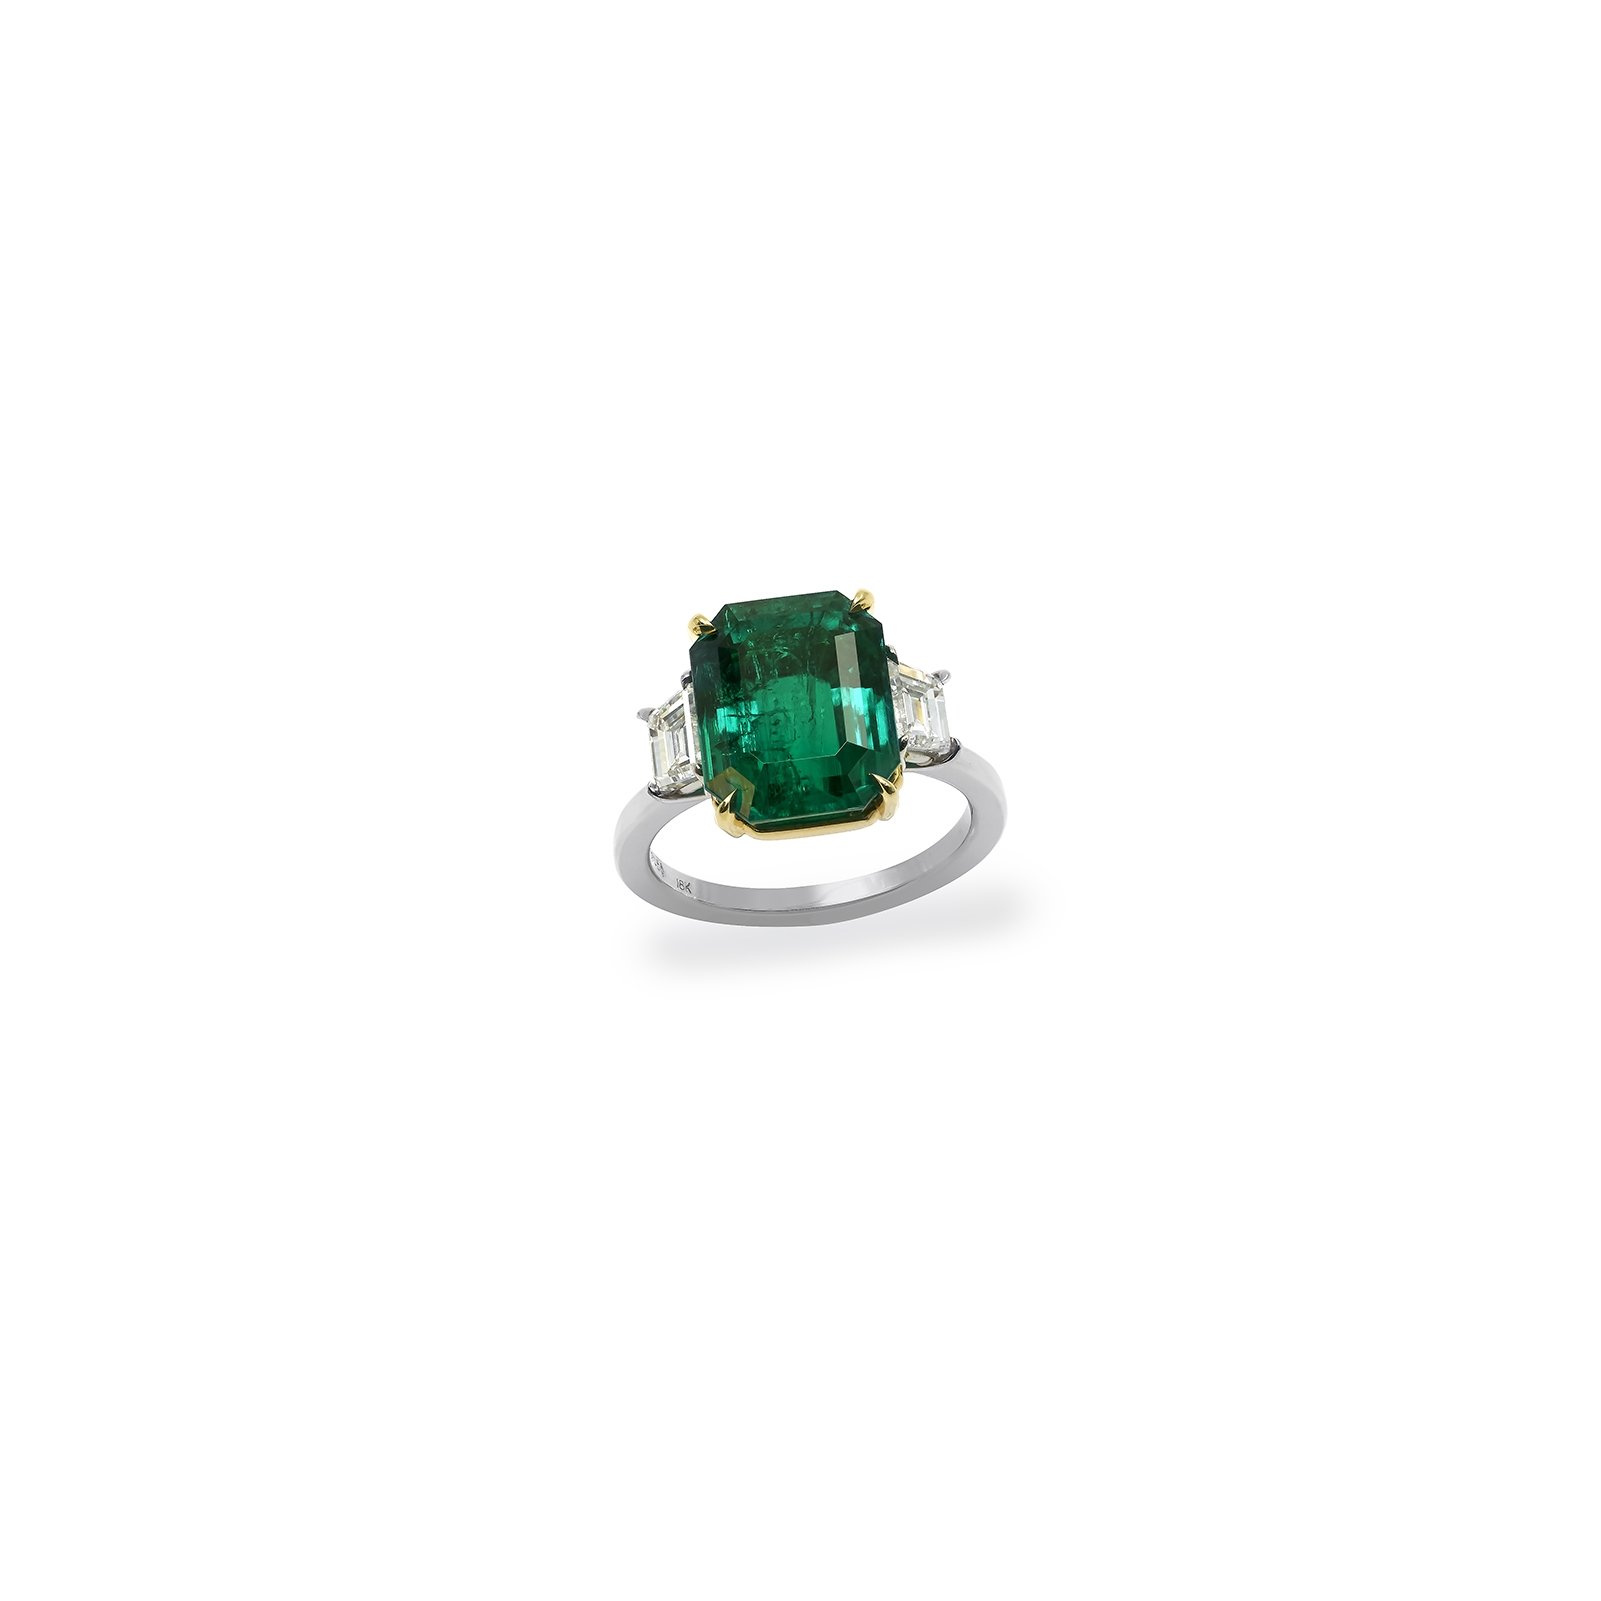 7 carat emerald cut ring